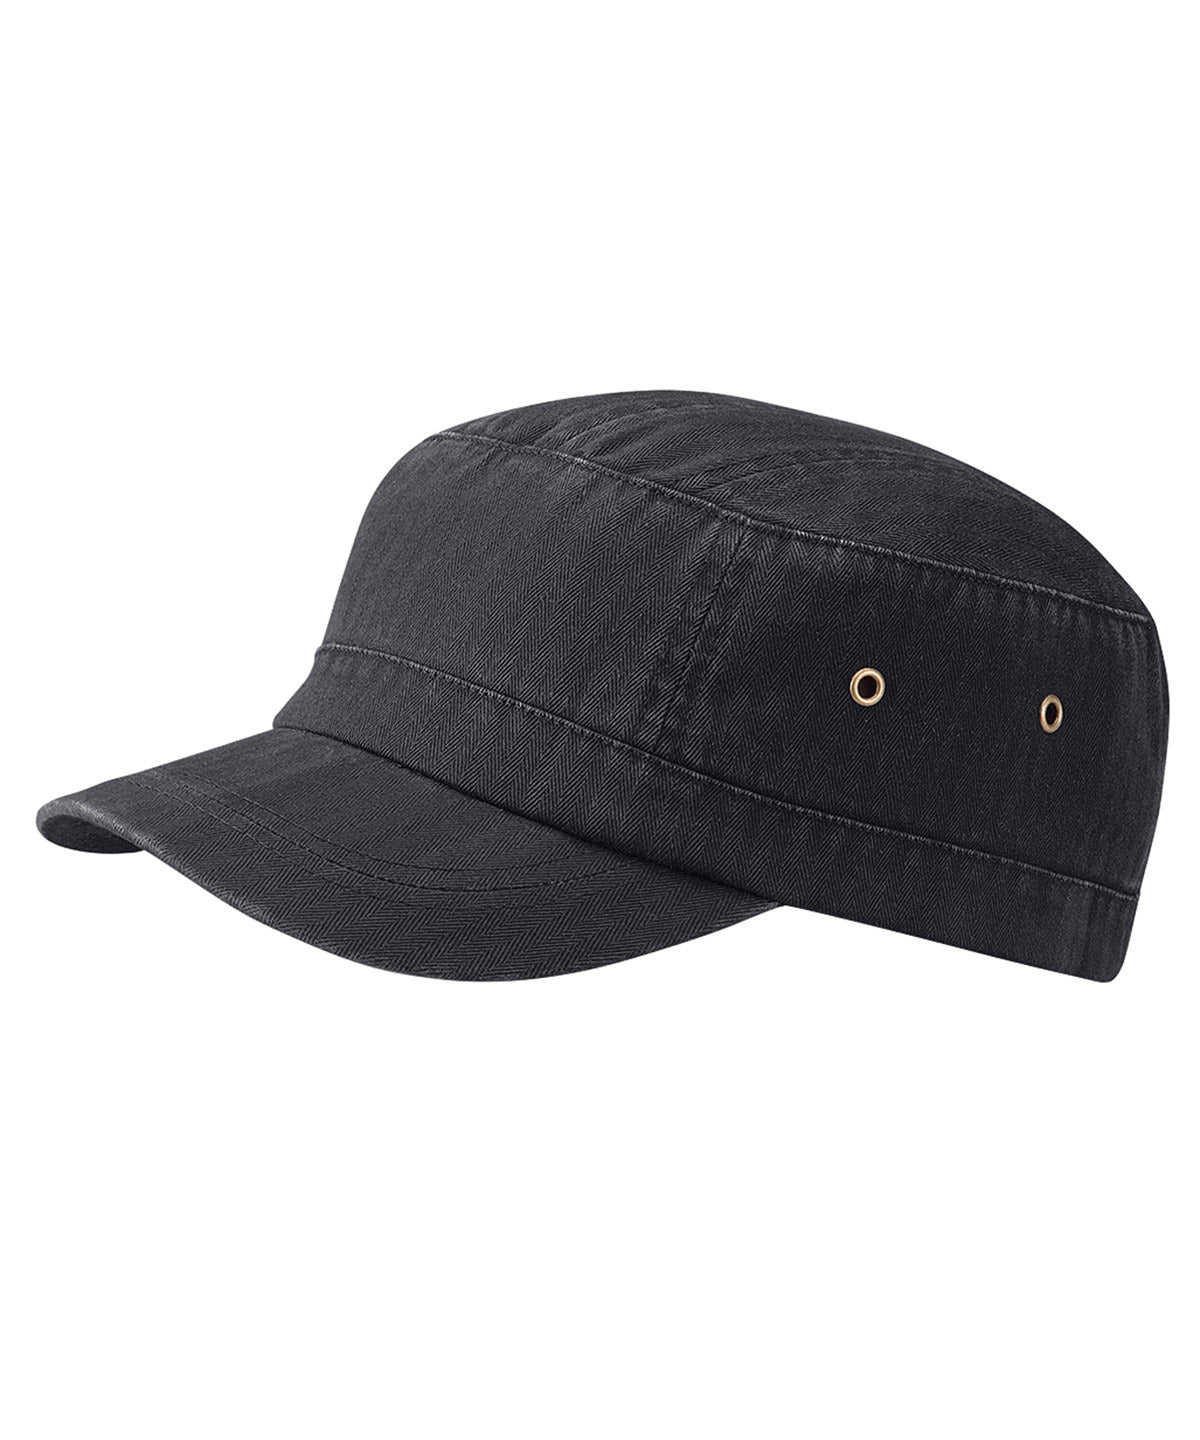 Personalised Caps - Black Beechfield Urban Army cap